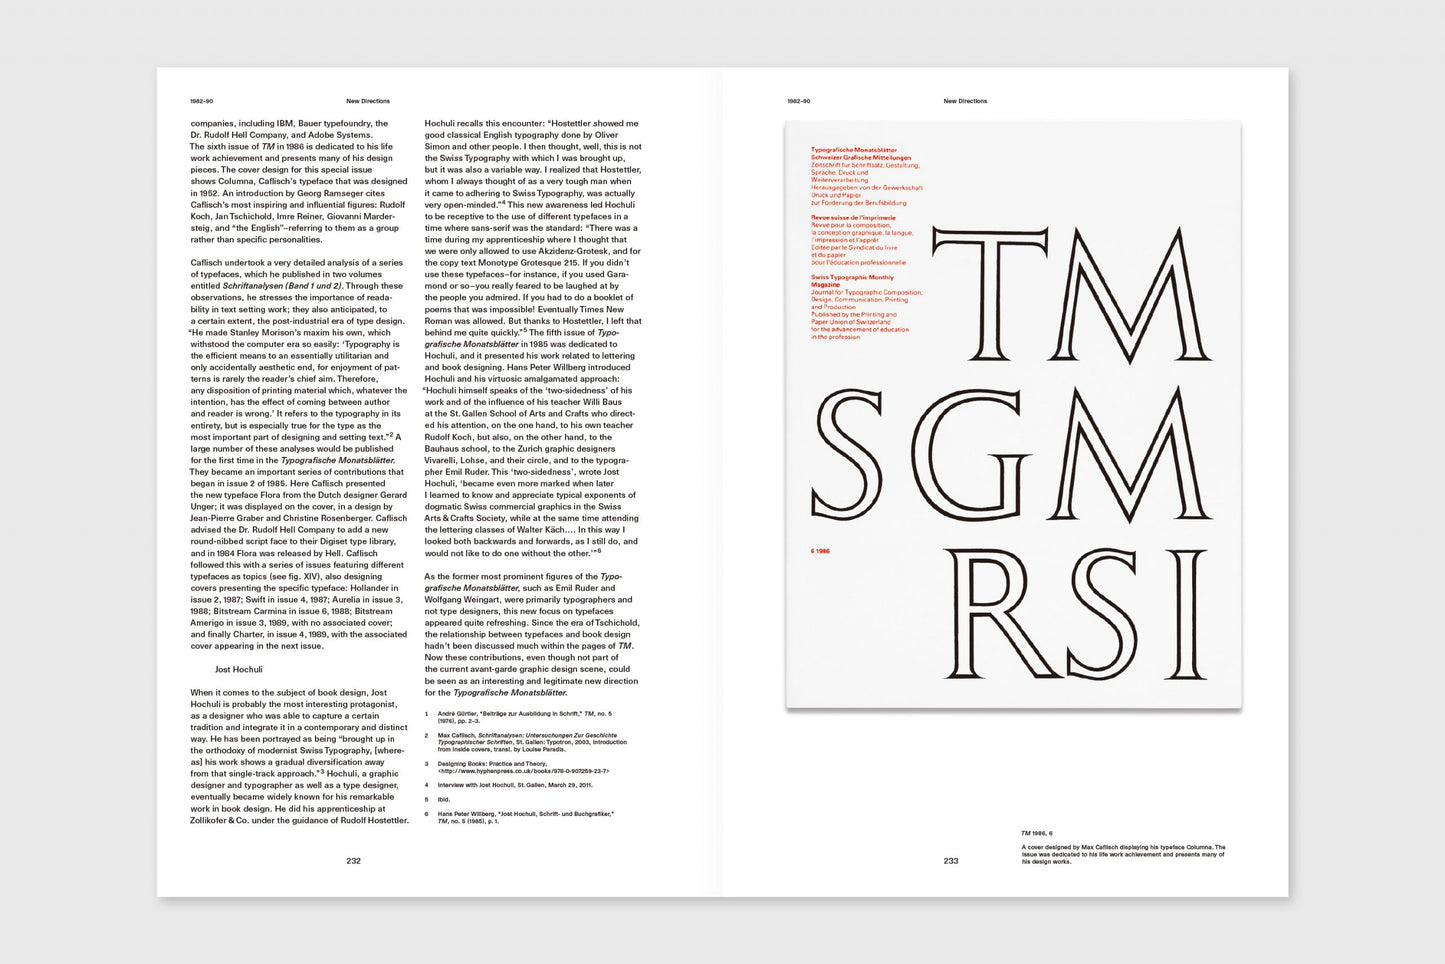 30 Years of Swiss Typographic Discourse in the Typografische Monatsblätter: TM RSI SGM 1960-90